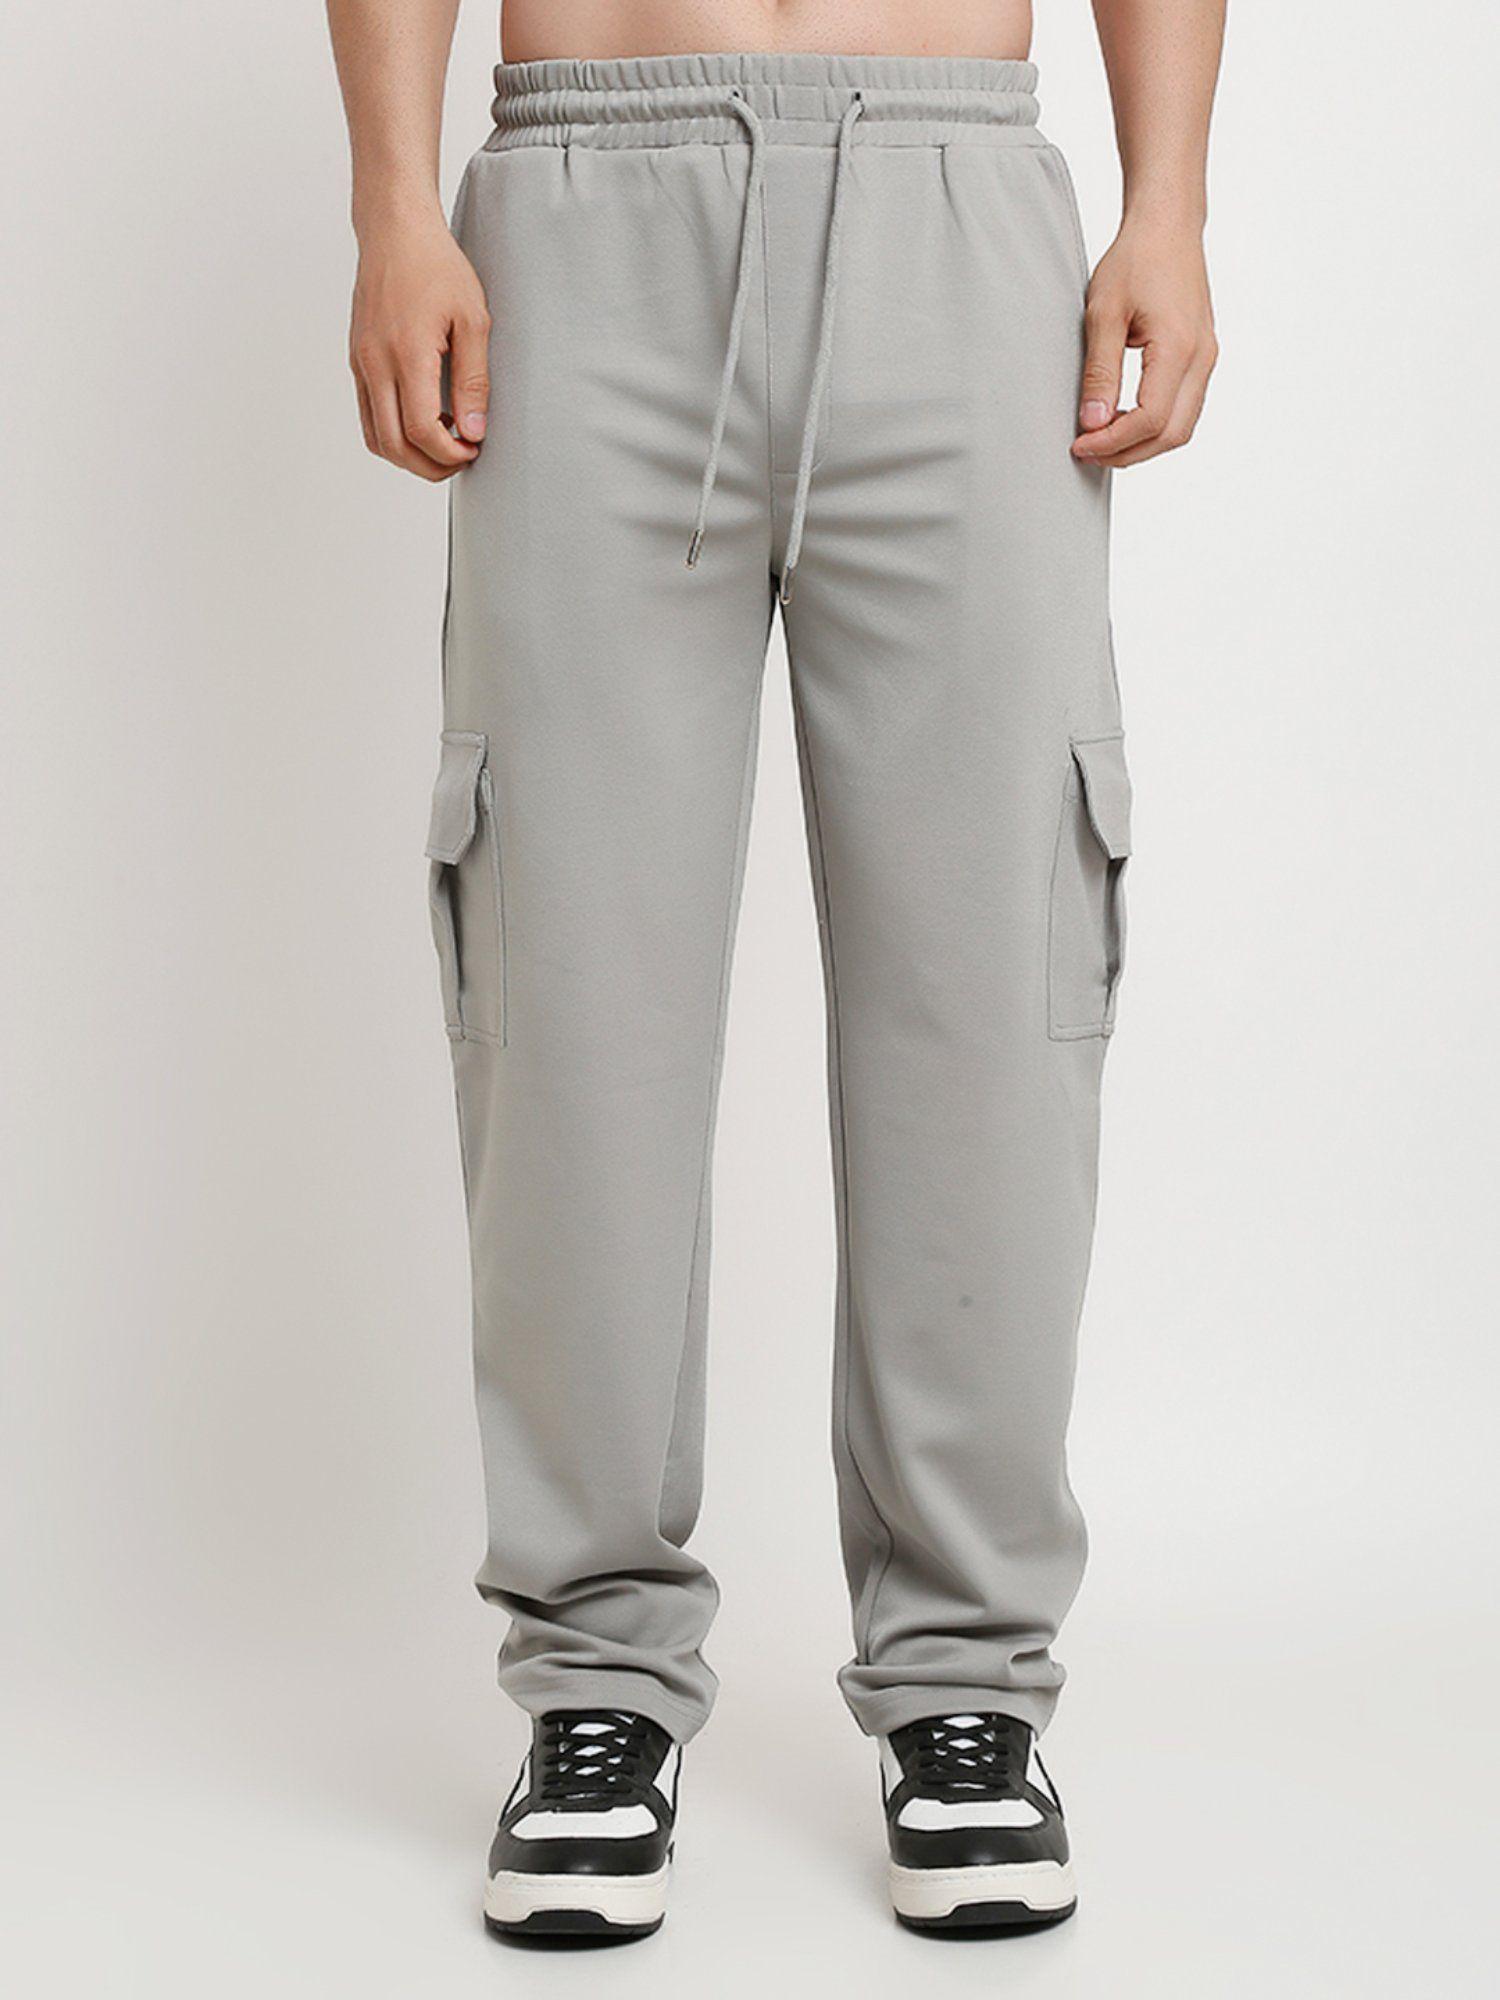 grey slim fit cargo pants